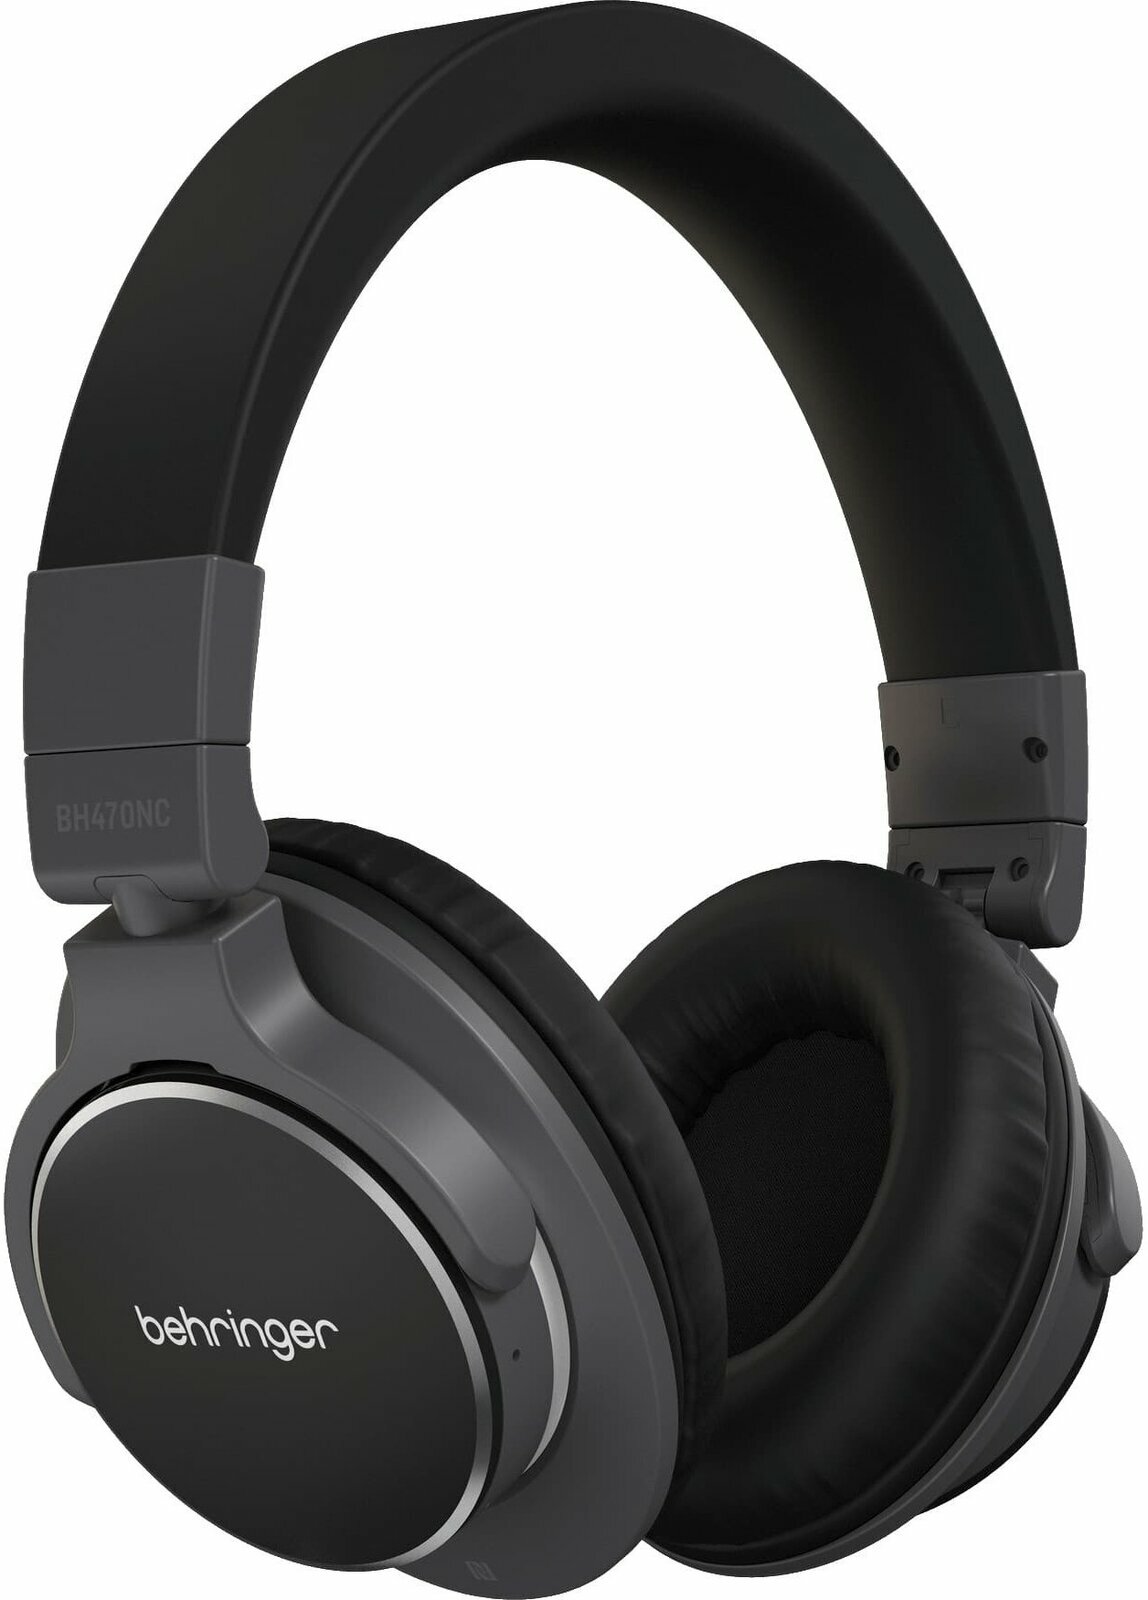 Bezdrátová sluchátka na uši Behringer BH470NC Black